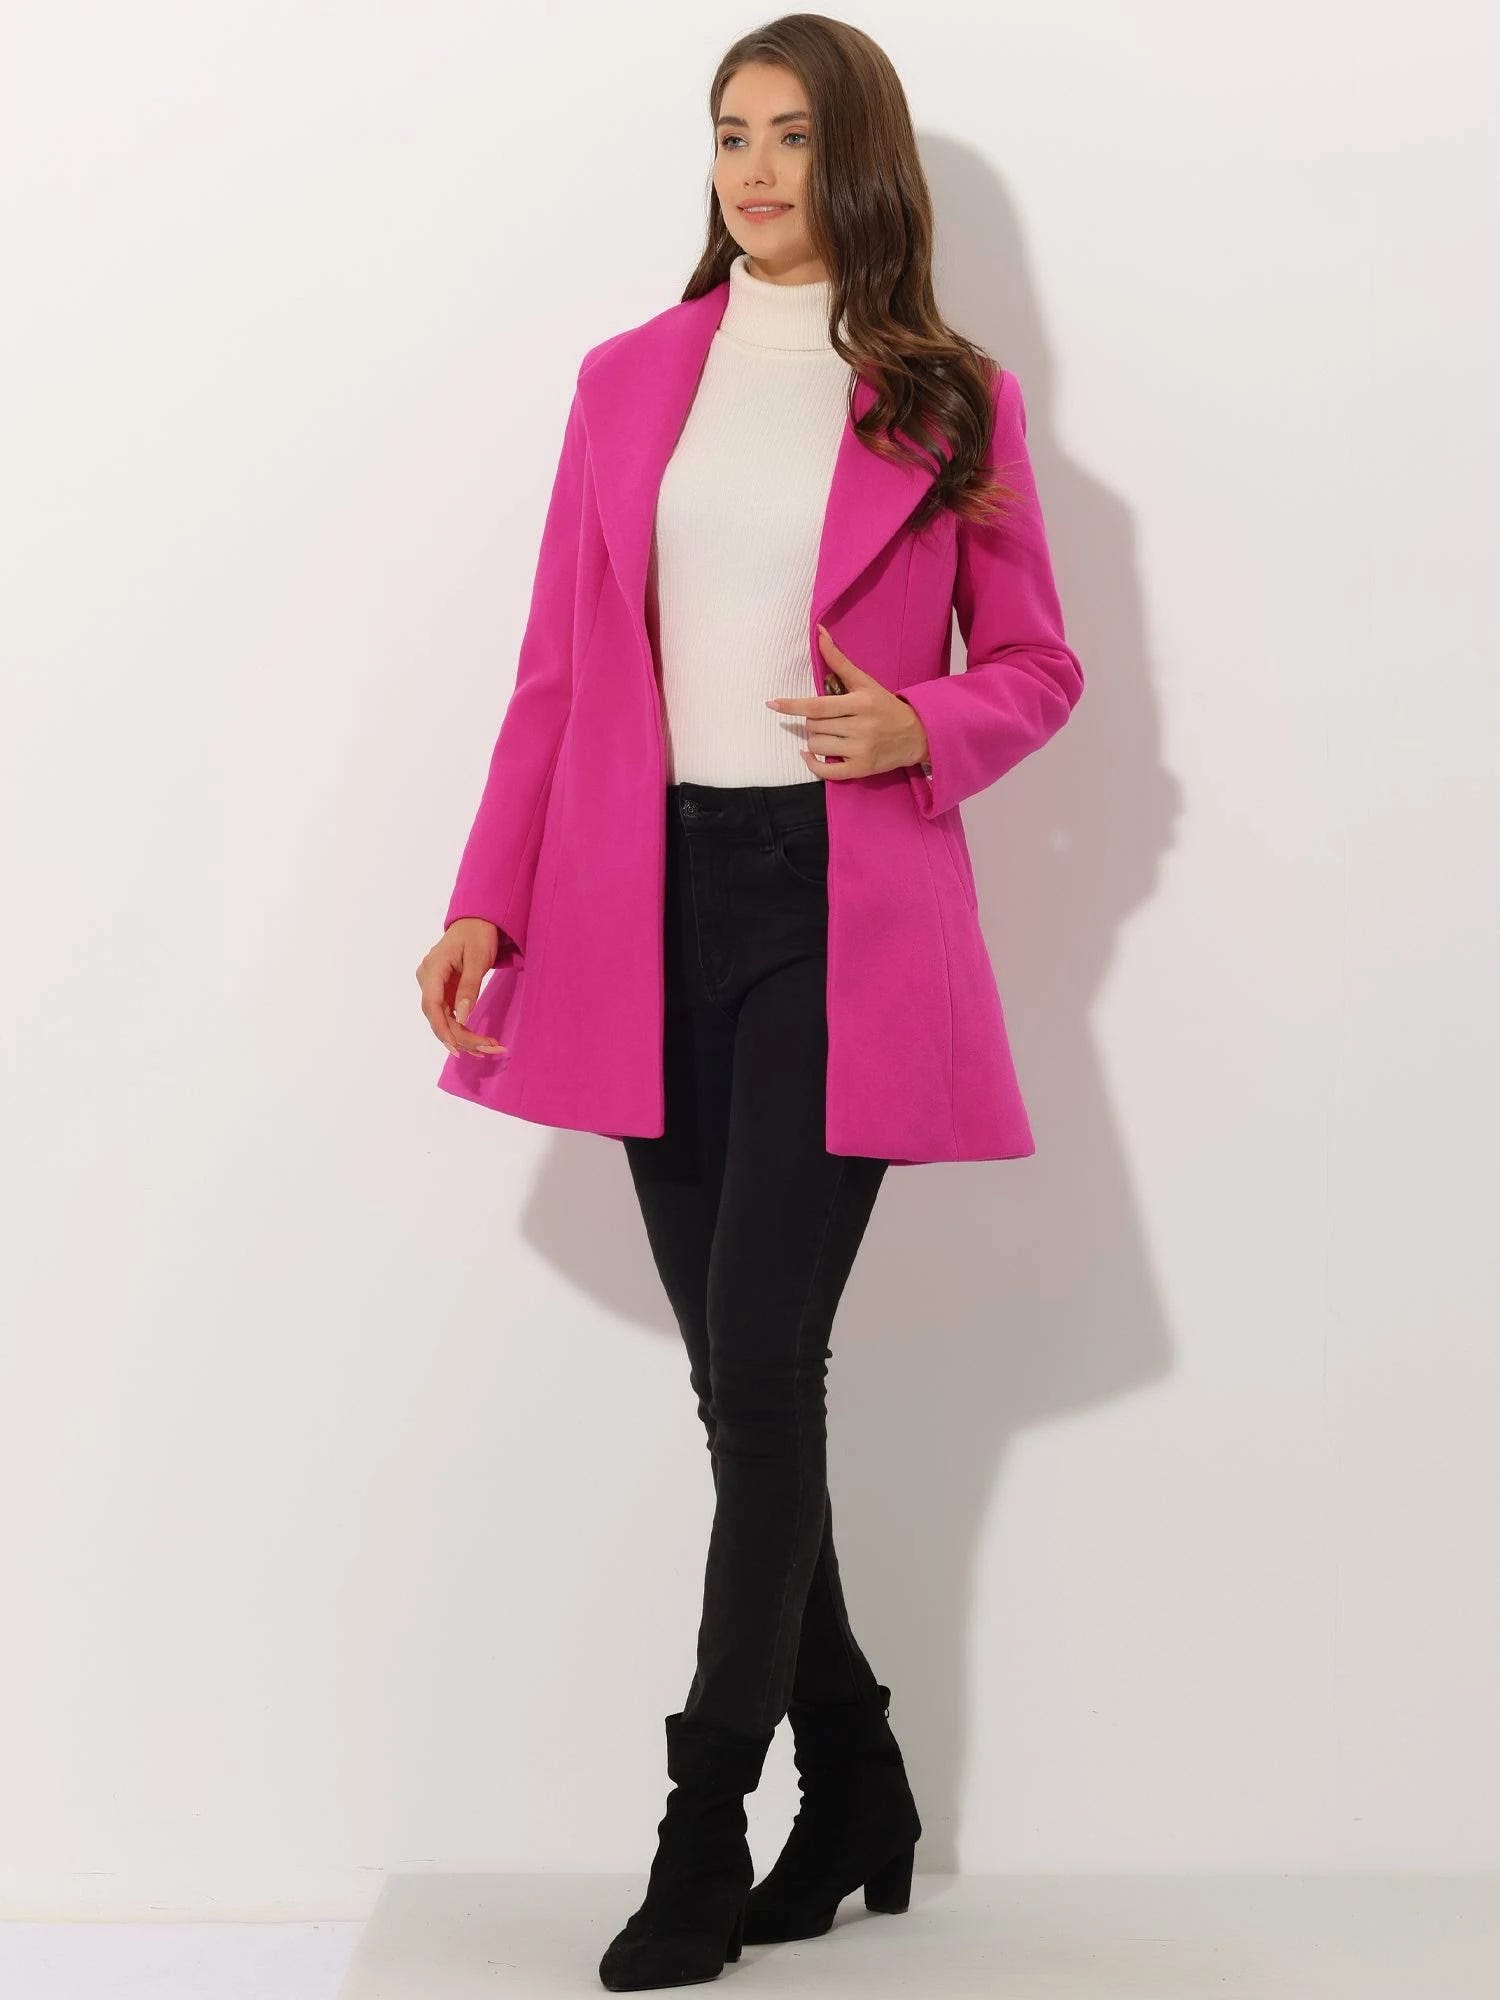 Stylish Hot Pink Winter Coat for Work | Image